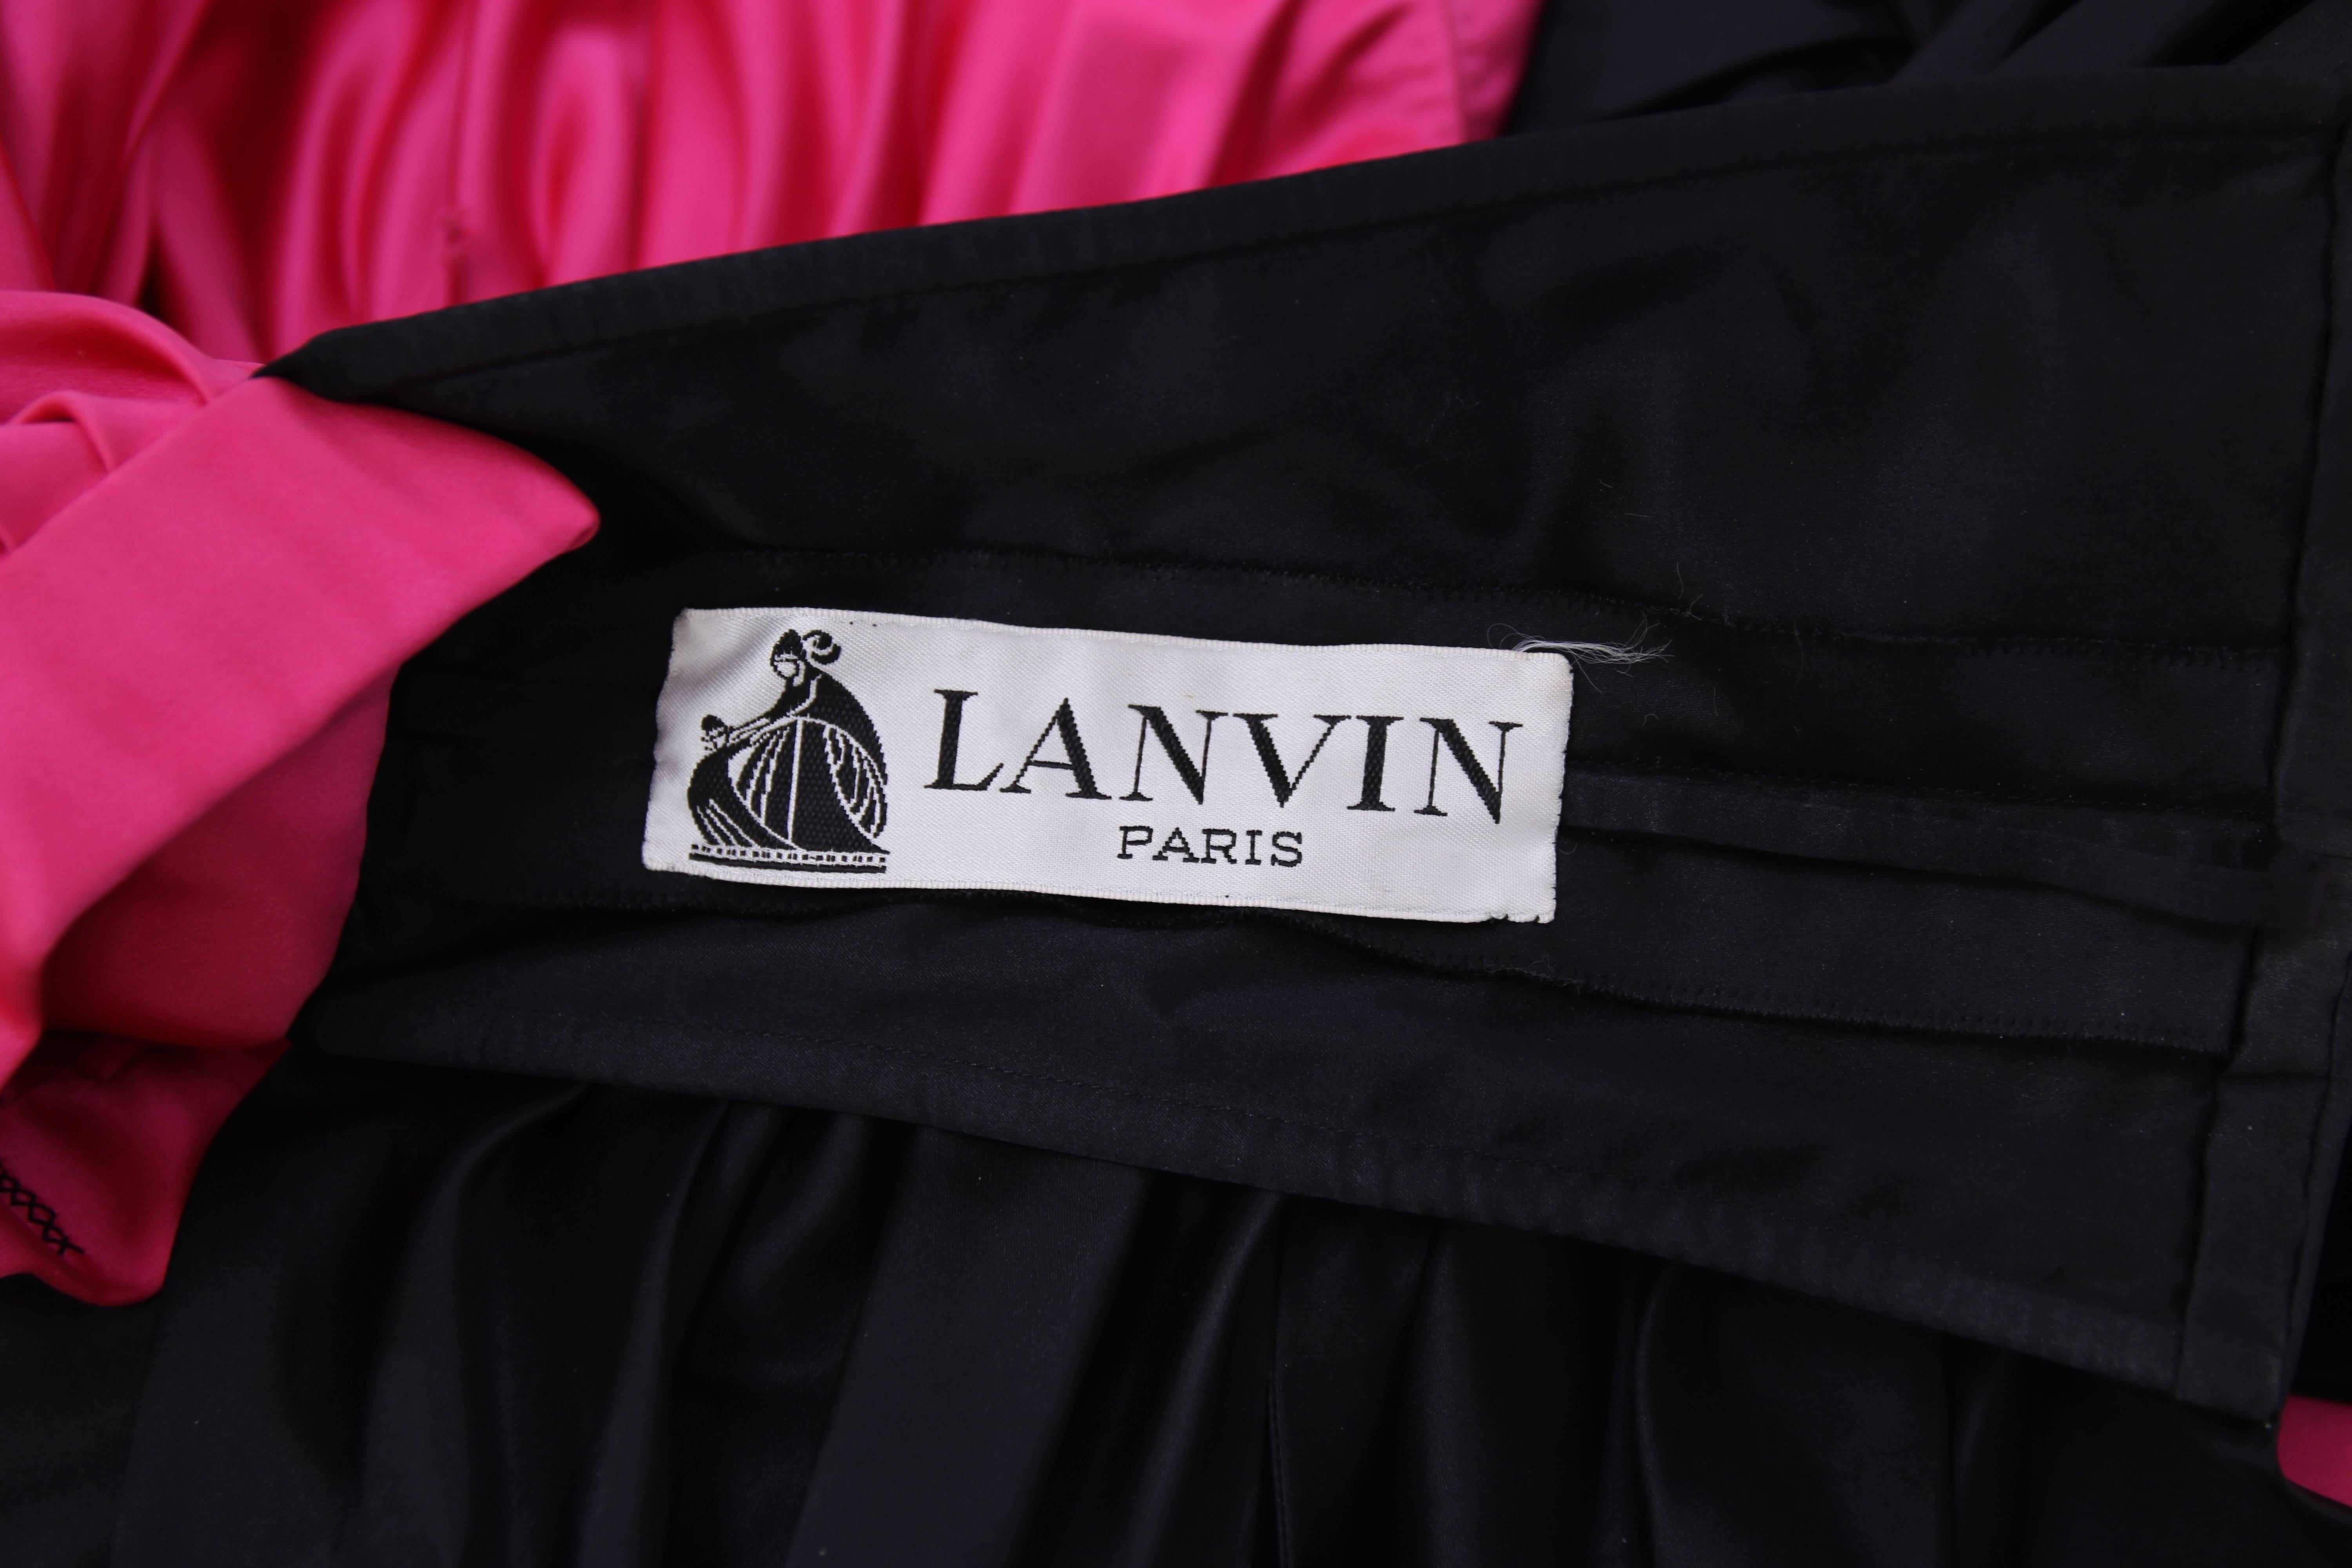 1979 Lanvin Haute Couture Pink & Black Satin Strapless Evening Gown No. 90724 2